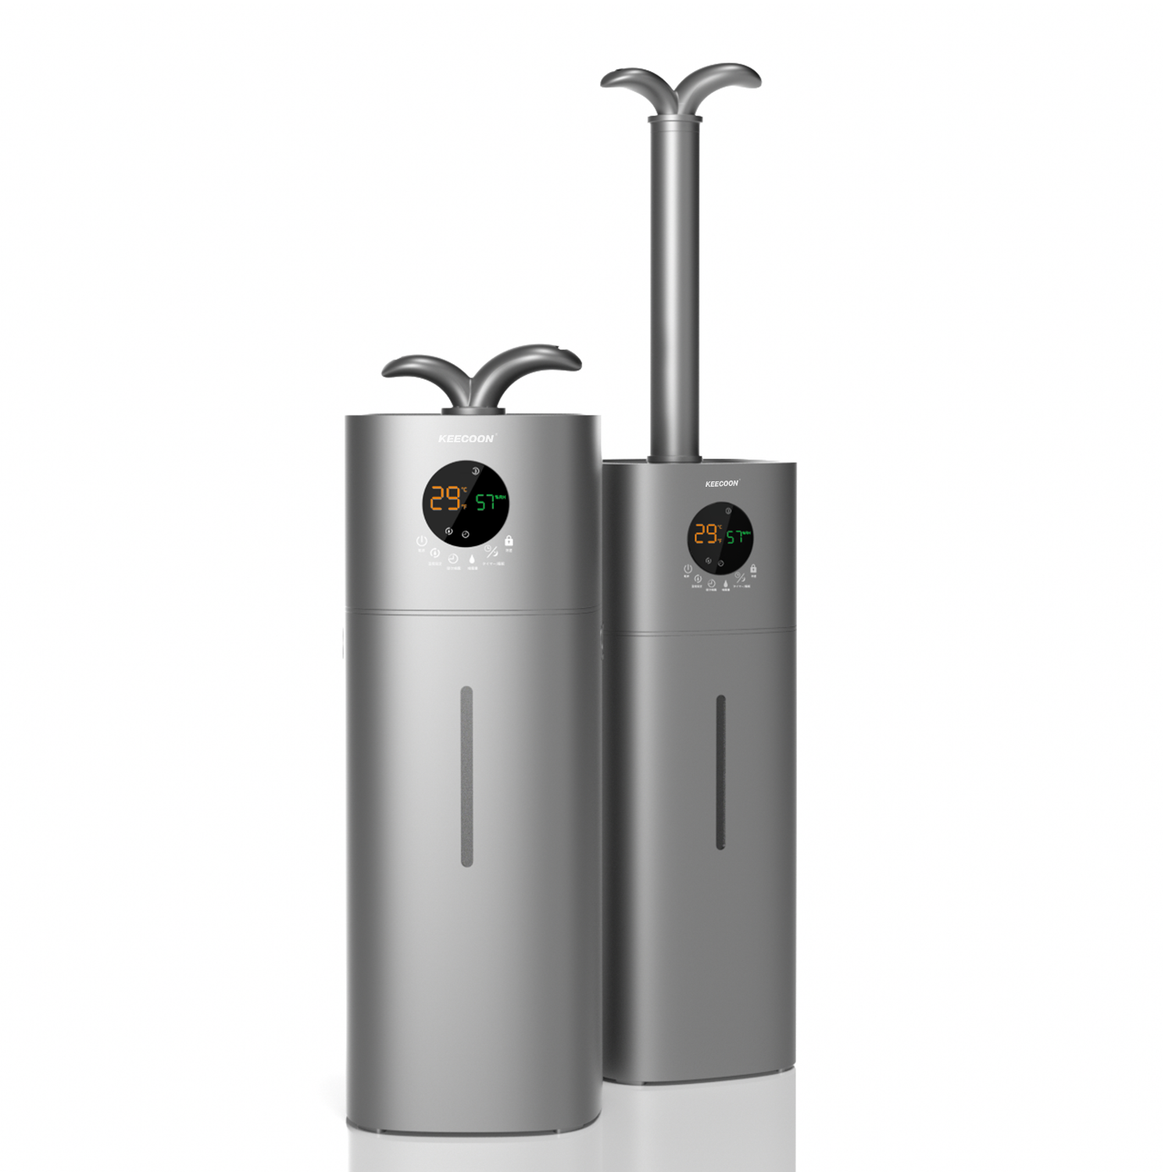 KEECOON 加湿器 大容量 業務用 家庭用 17Lタワー式 超音波加湿器 噴霧器 部屋 保湿 上から給水 お手入れ簡単 静音 水漏れしな